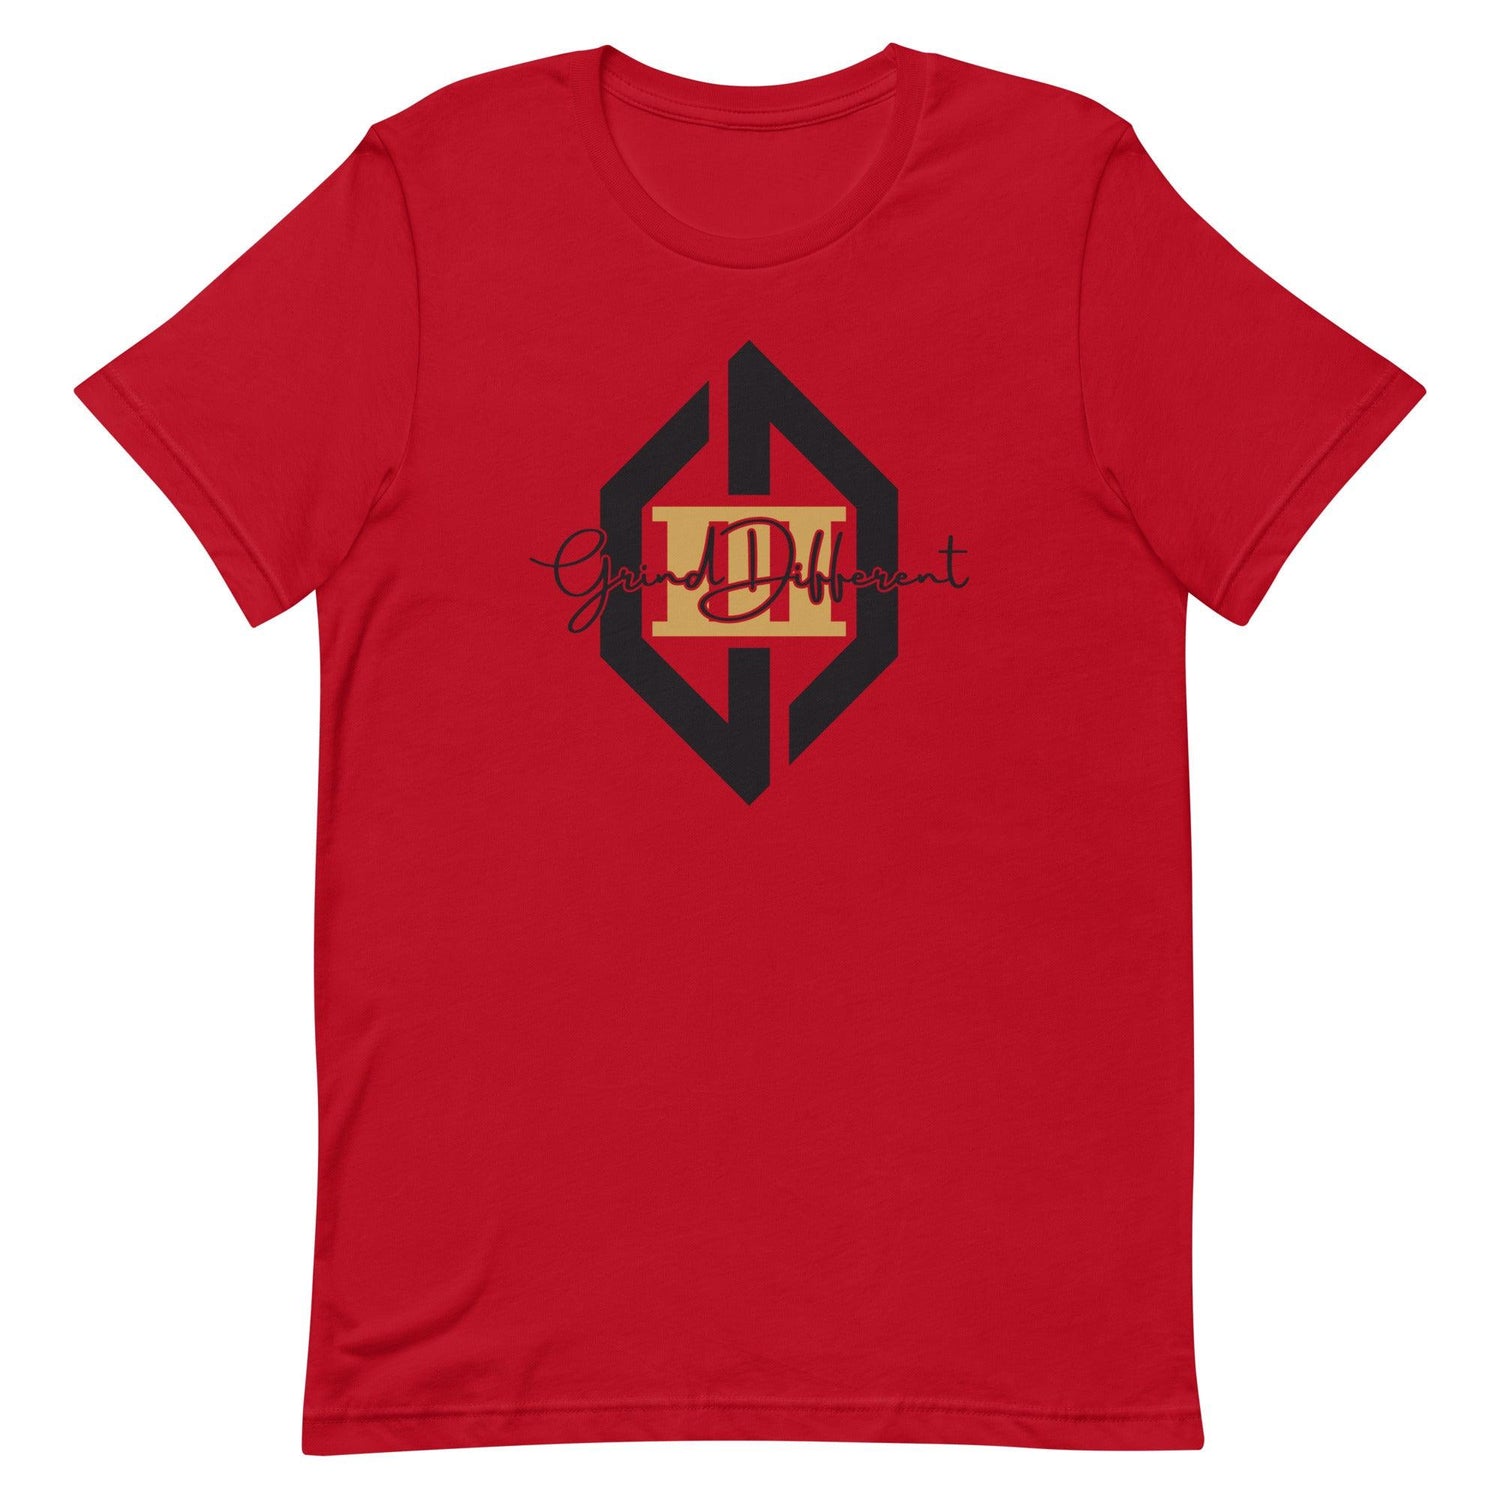 Claudale Davis III “Signature” t-shirt - Fan Arch